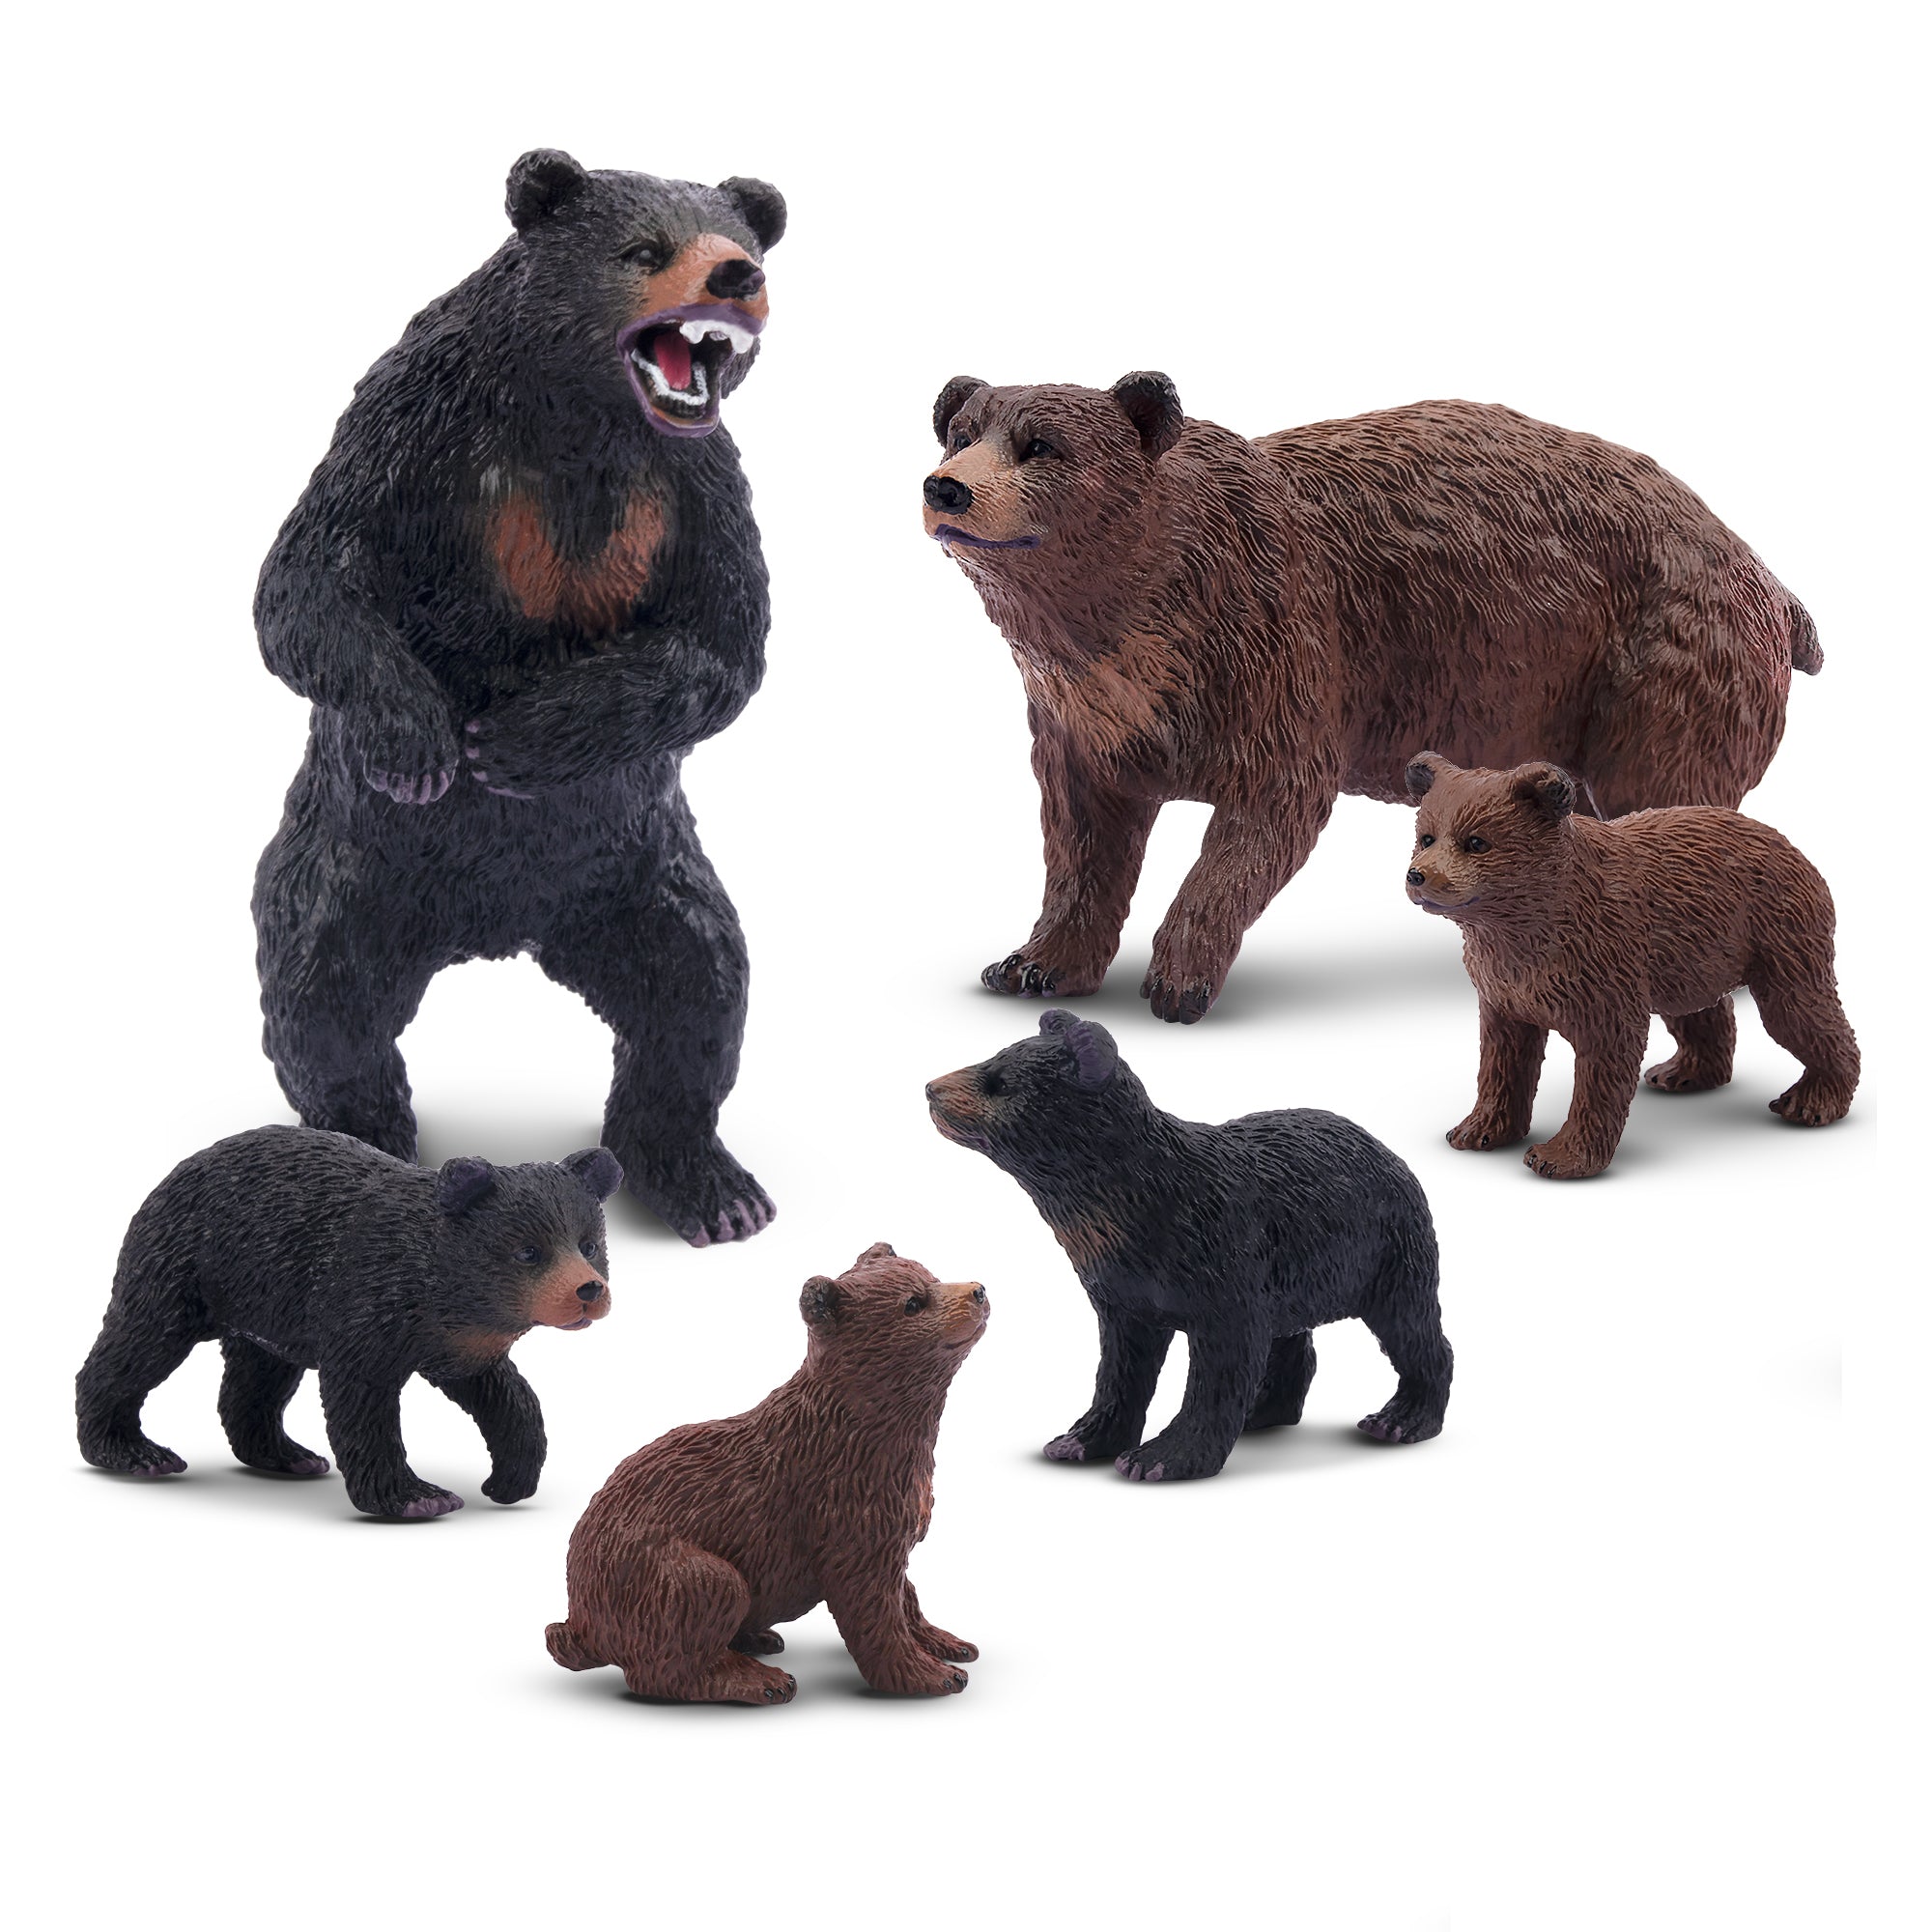 6-Piece Bear Figurines Playset with Brown & Black Bears-2